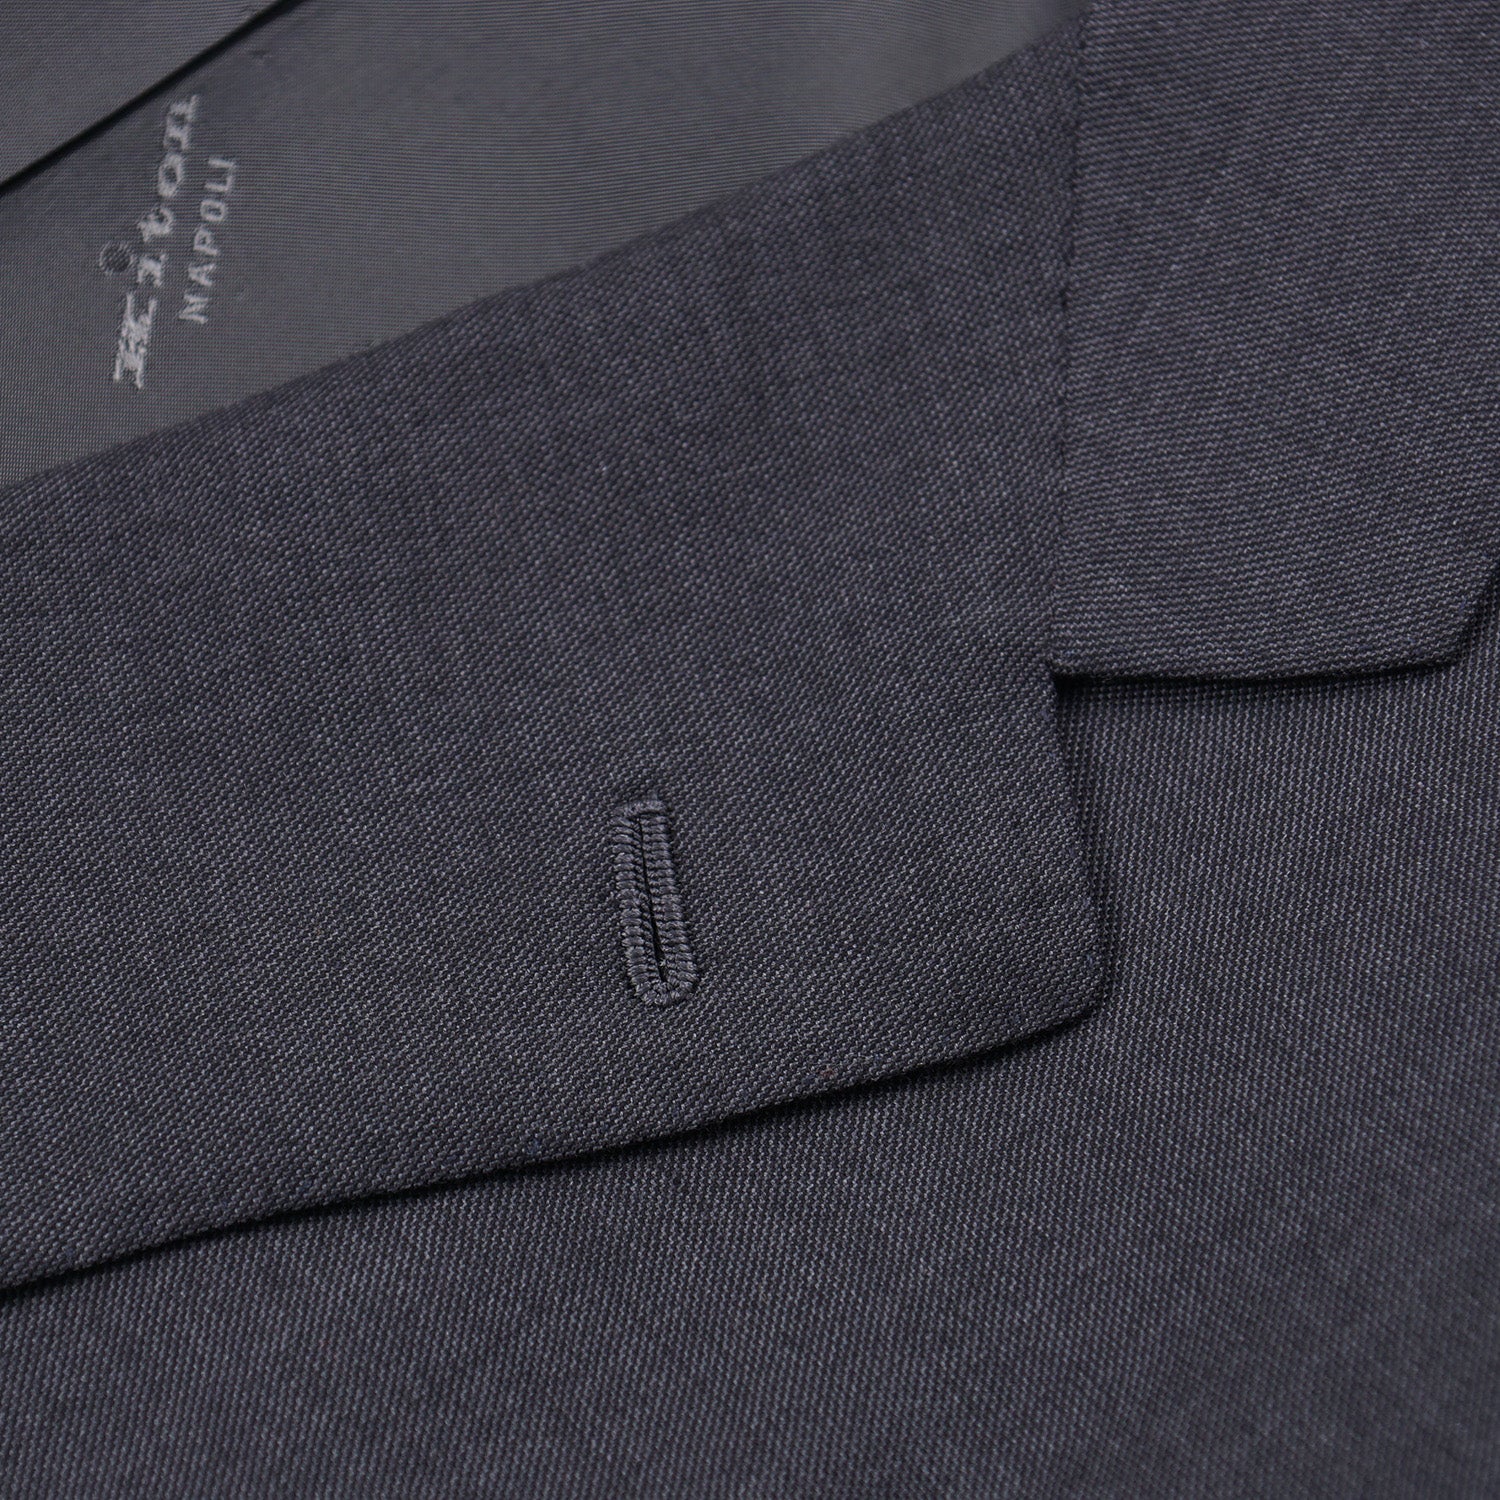 Kiton Slim-Fit Super 180s Suit - Top Shelf Apparel